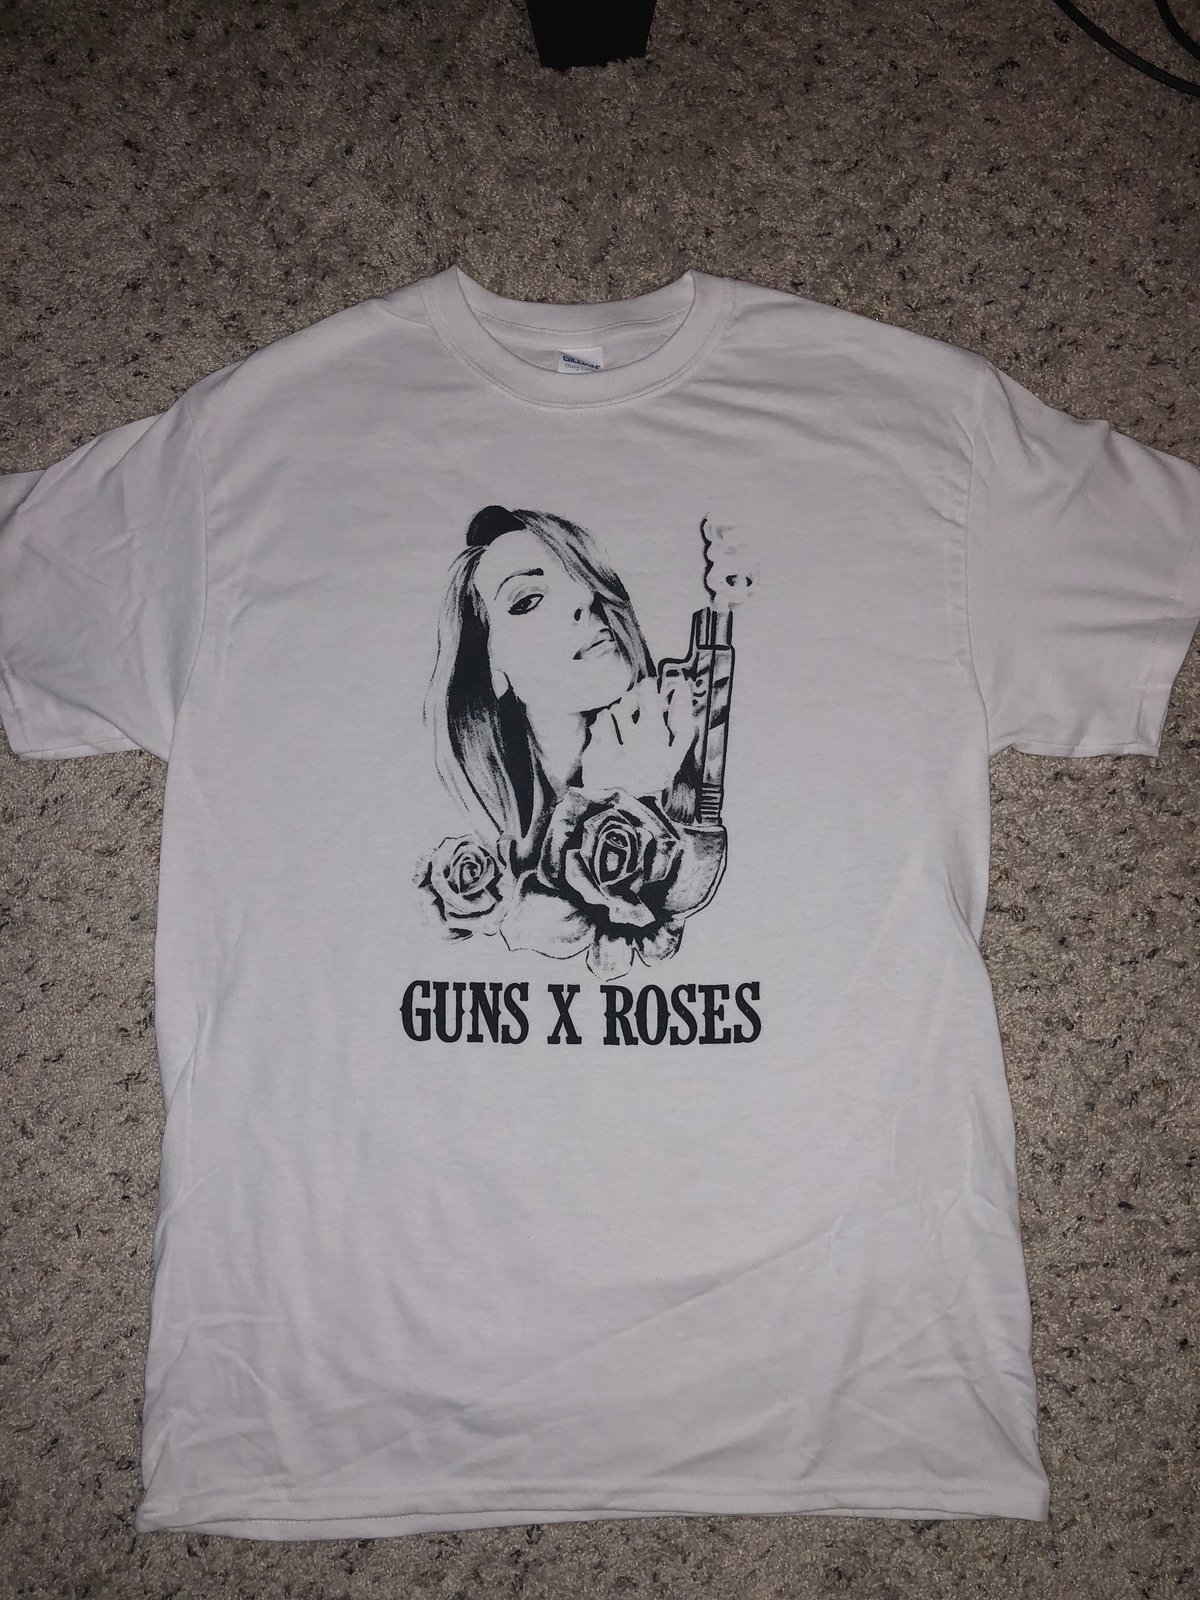 NEW!!! Guns X Roses White Tee